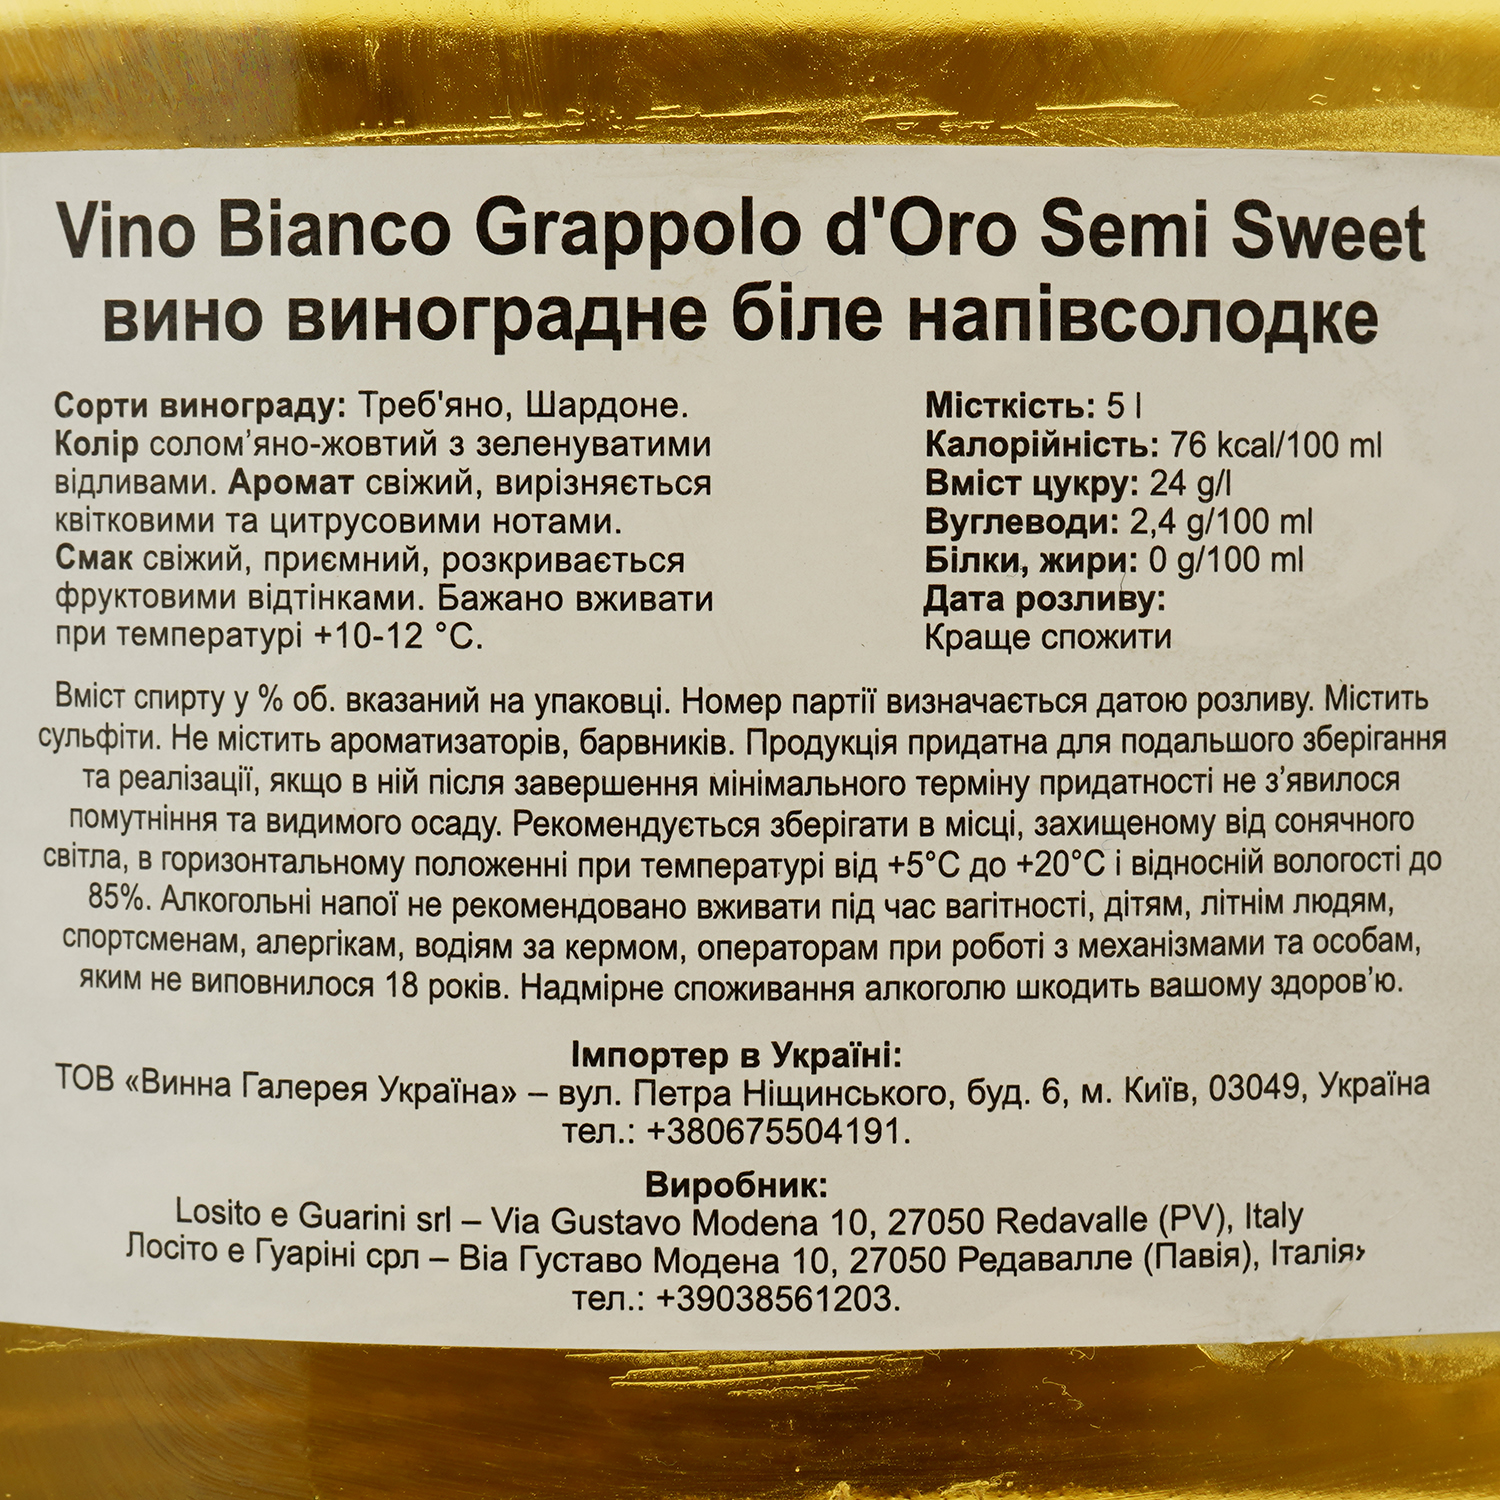 Вино Vino Bianco Grappolo d'Oro Semi Sweet, біле, напівсолодке, 5 л - фото 3